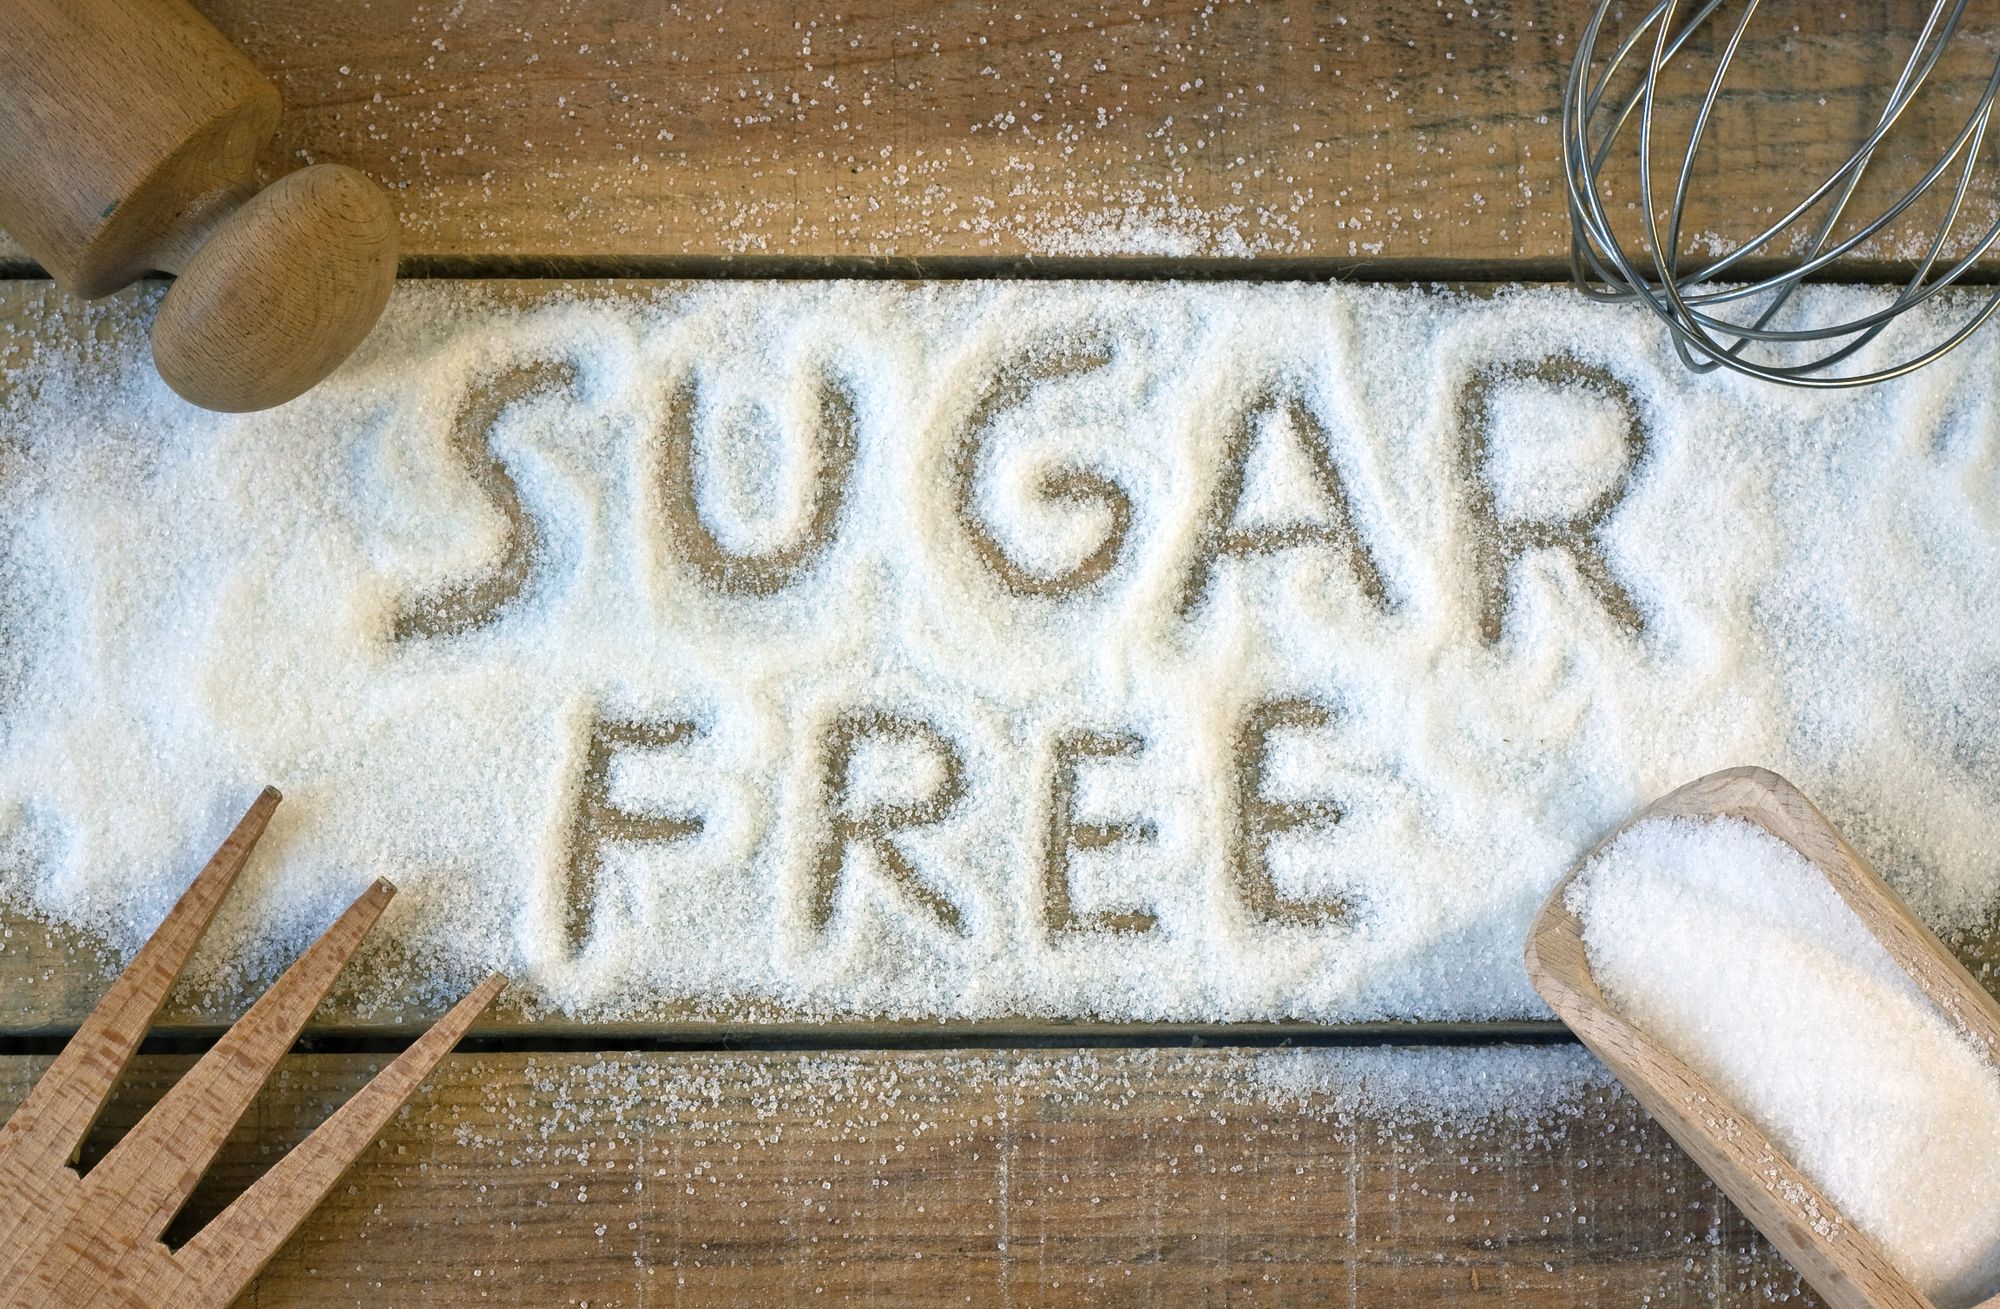 Sugar Free by xamnesiacx84 | www.shutterstock.com